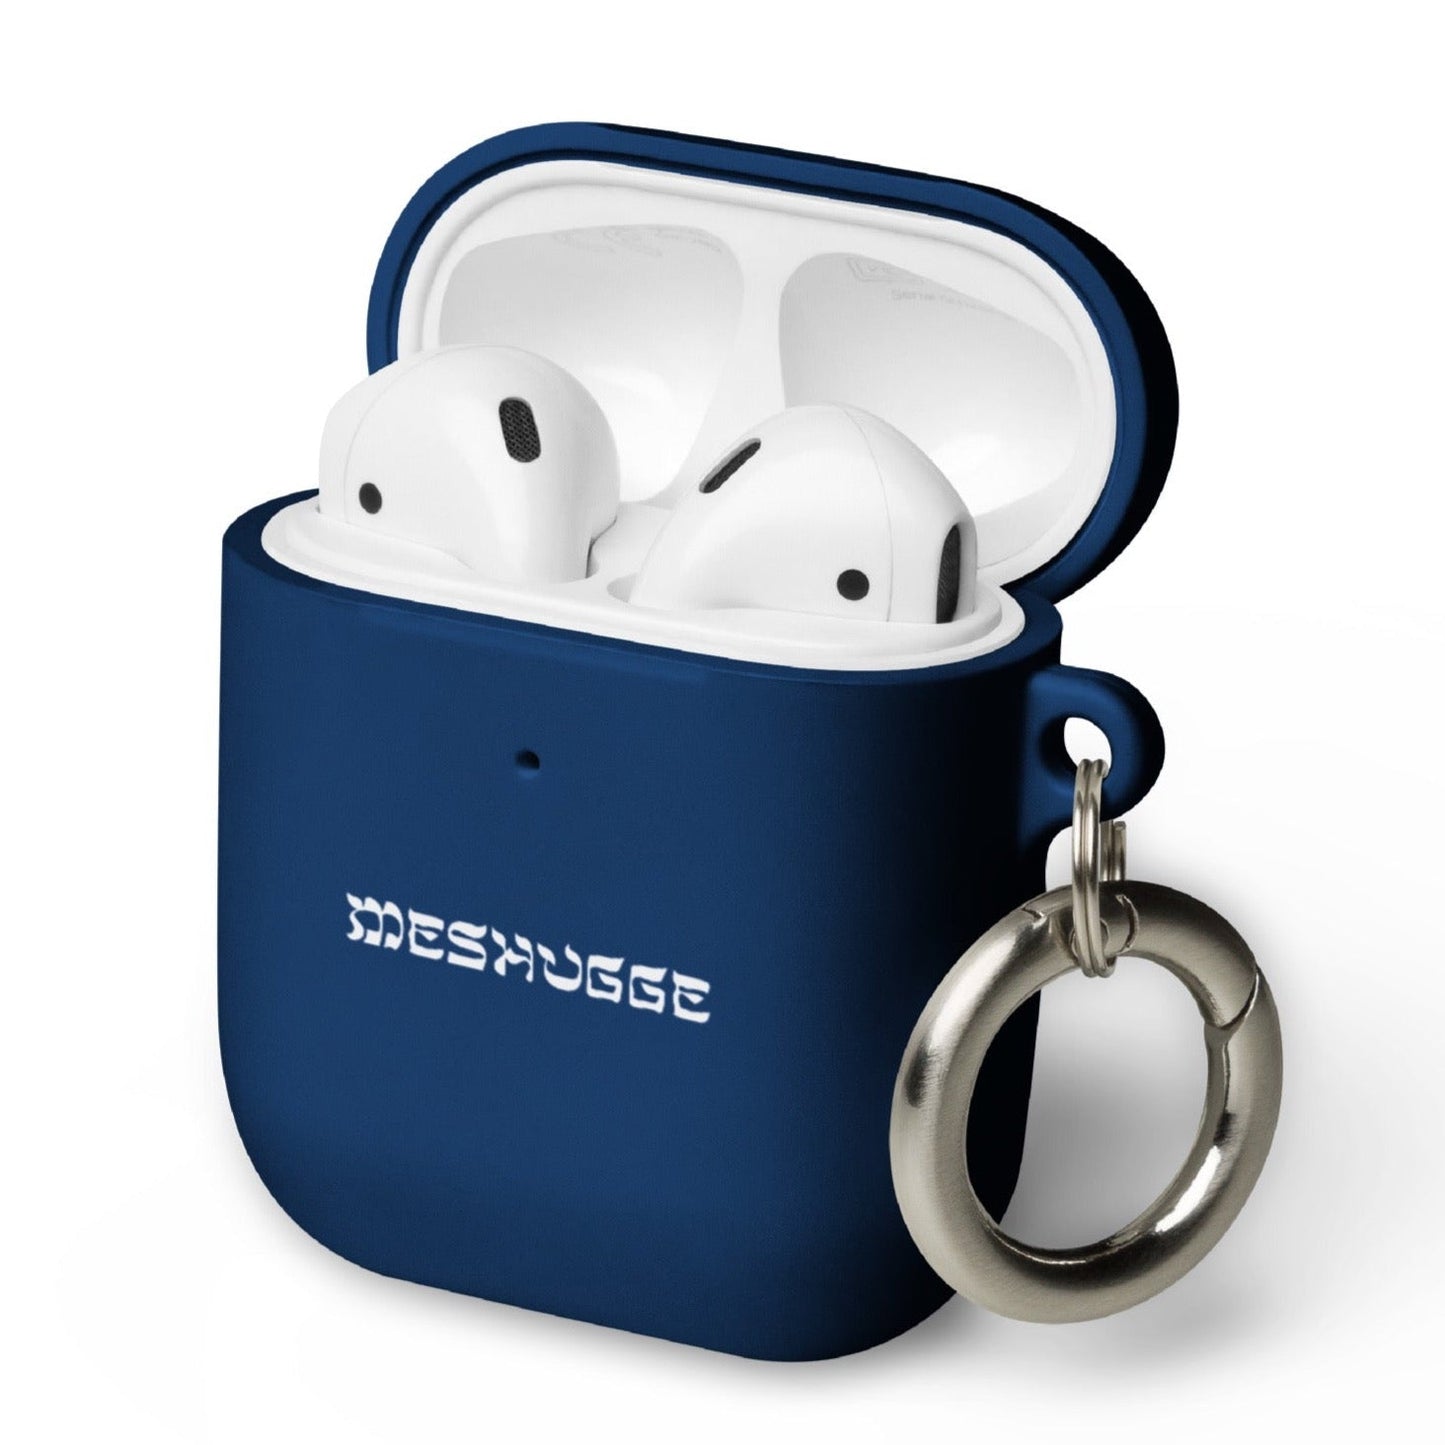 'Meshugge' AirPods Case - Accessories - Meshugge